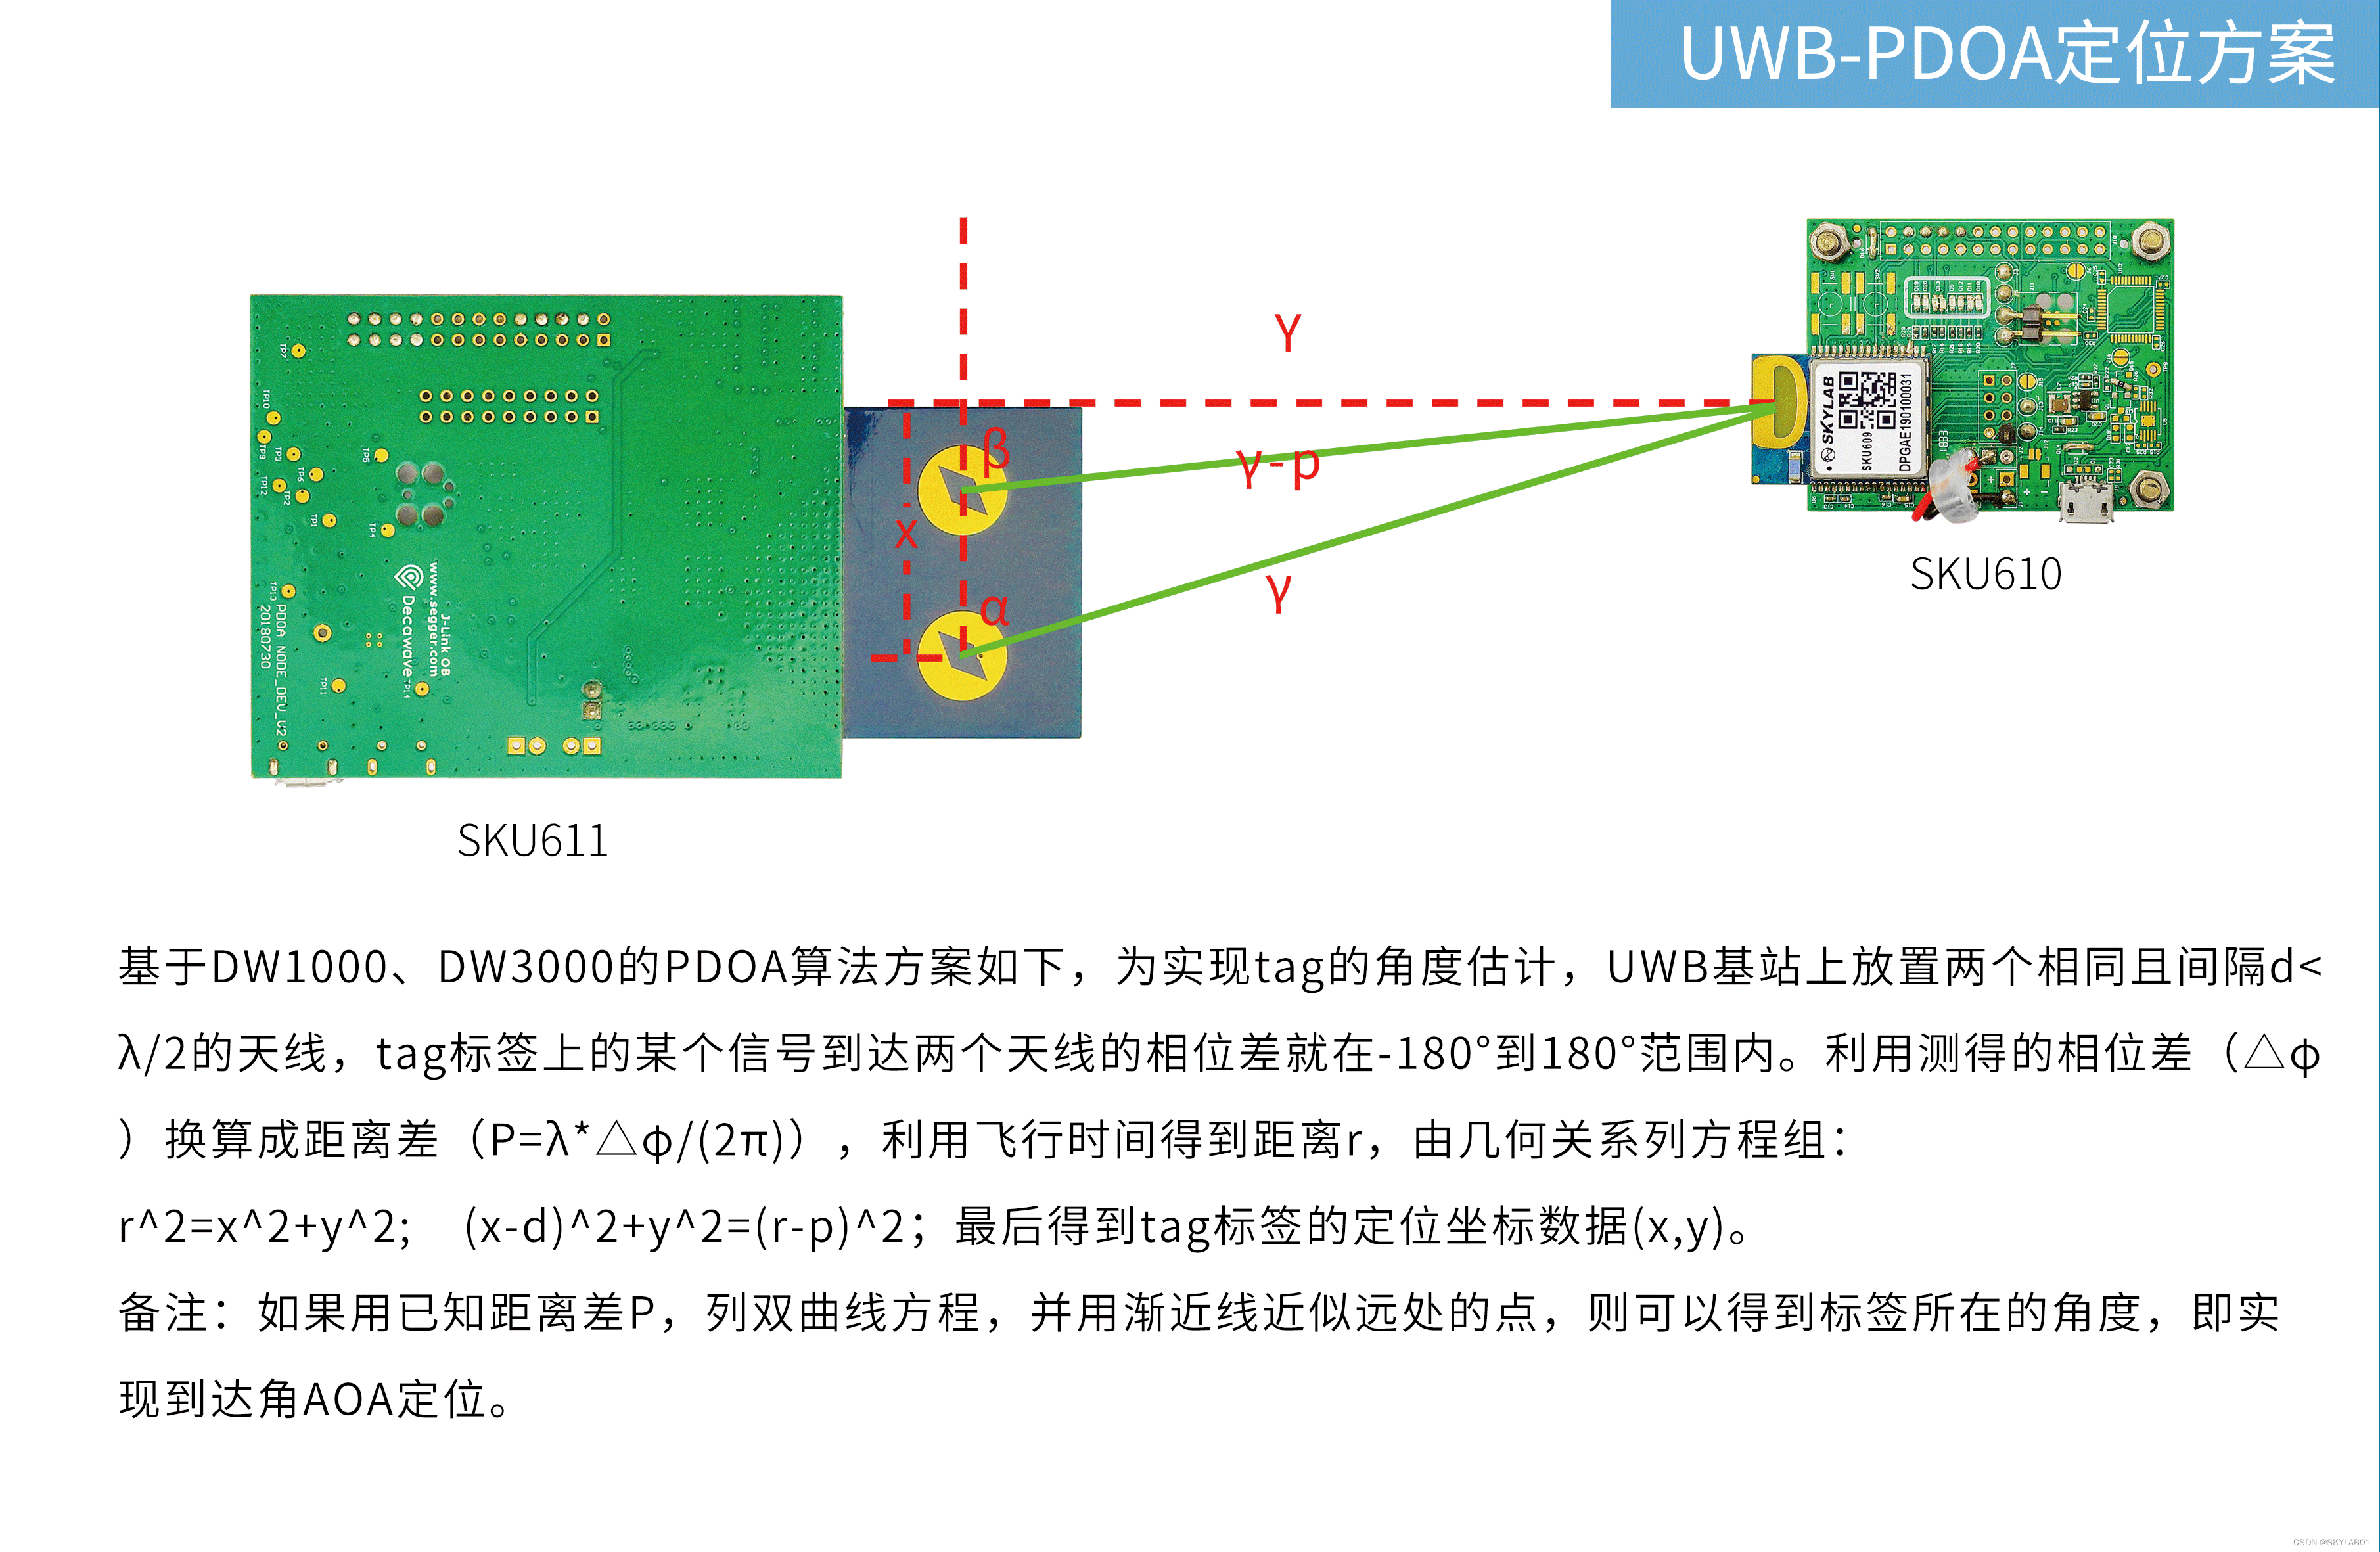 【室内定位】UWB TDOA定位，PDOA定位介绍_无人机_05